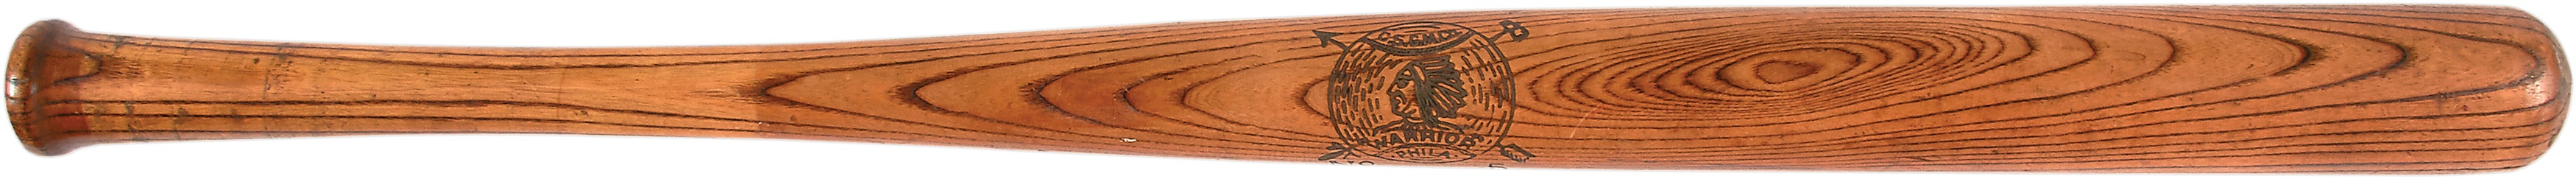 Antique Sporting Goods - Circa 1900 Warrior Baseball Bat